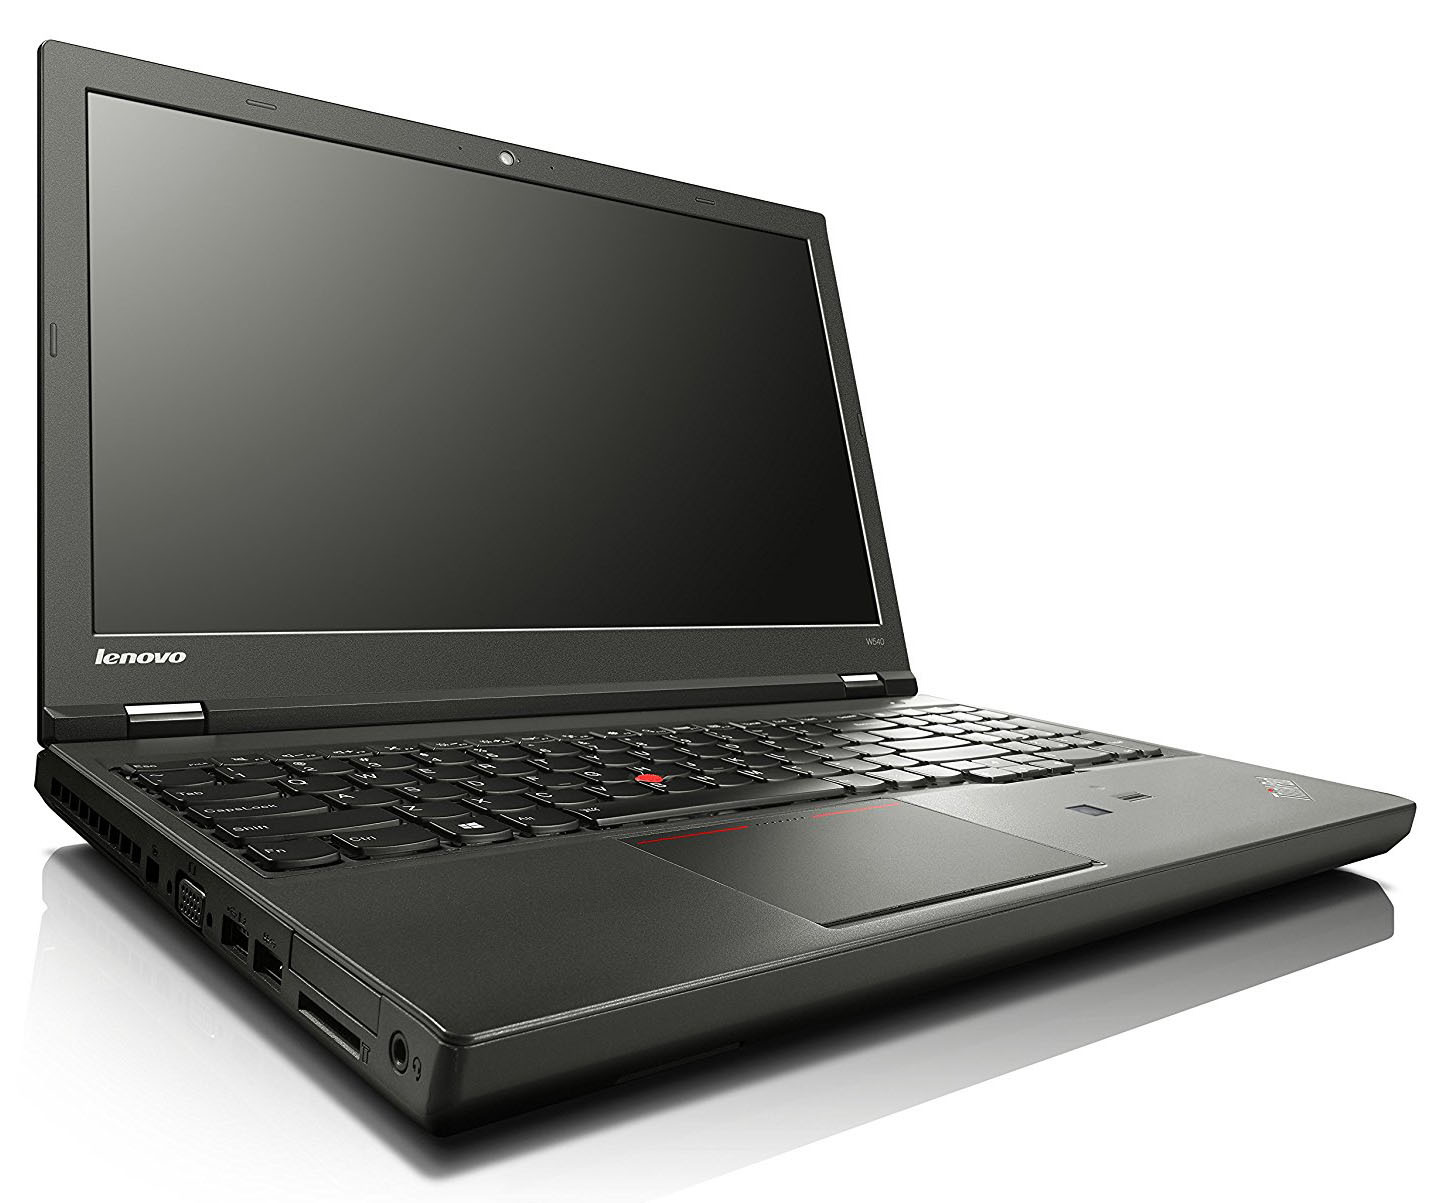 Lenovo ThinkPad W540 Intel i7 4800MQ 2.70GHz 8GB RAM 180GB SSD 15.6" NO OS - B Grade Full Size Image